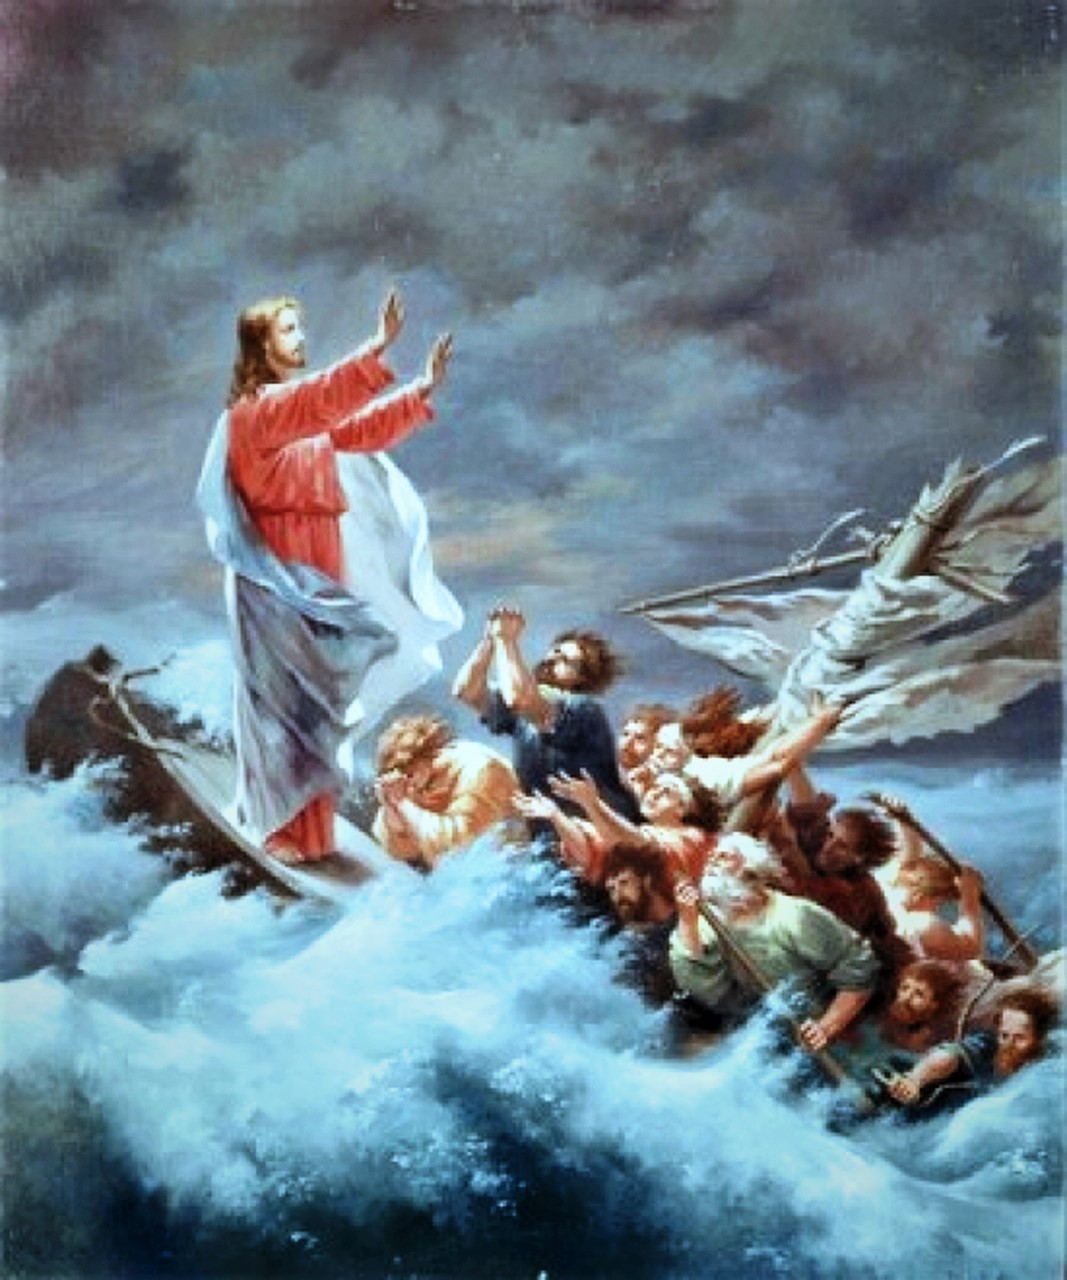 耶稣平静风浪 - Jesus Calms the Storm by Freekidstories - Issuu